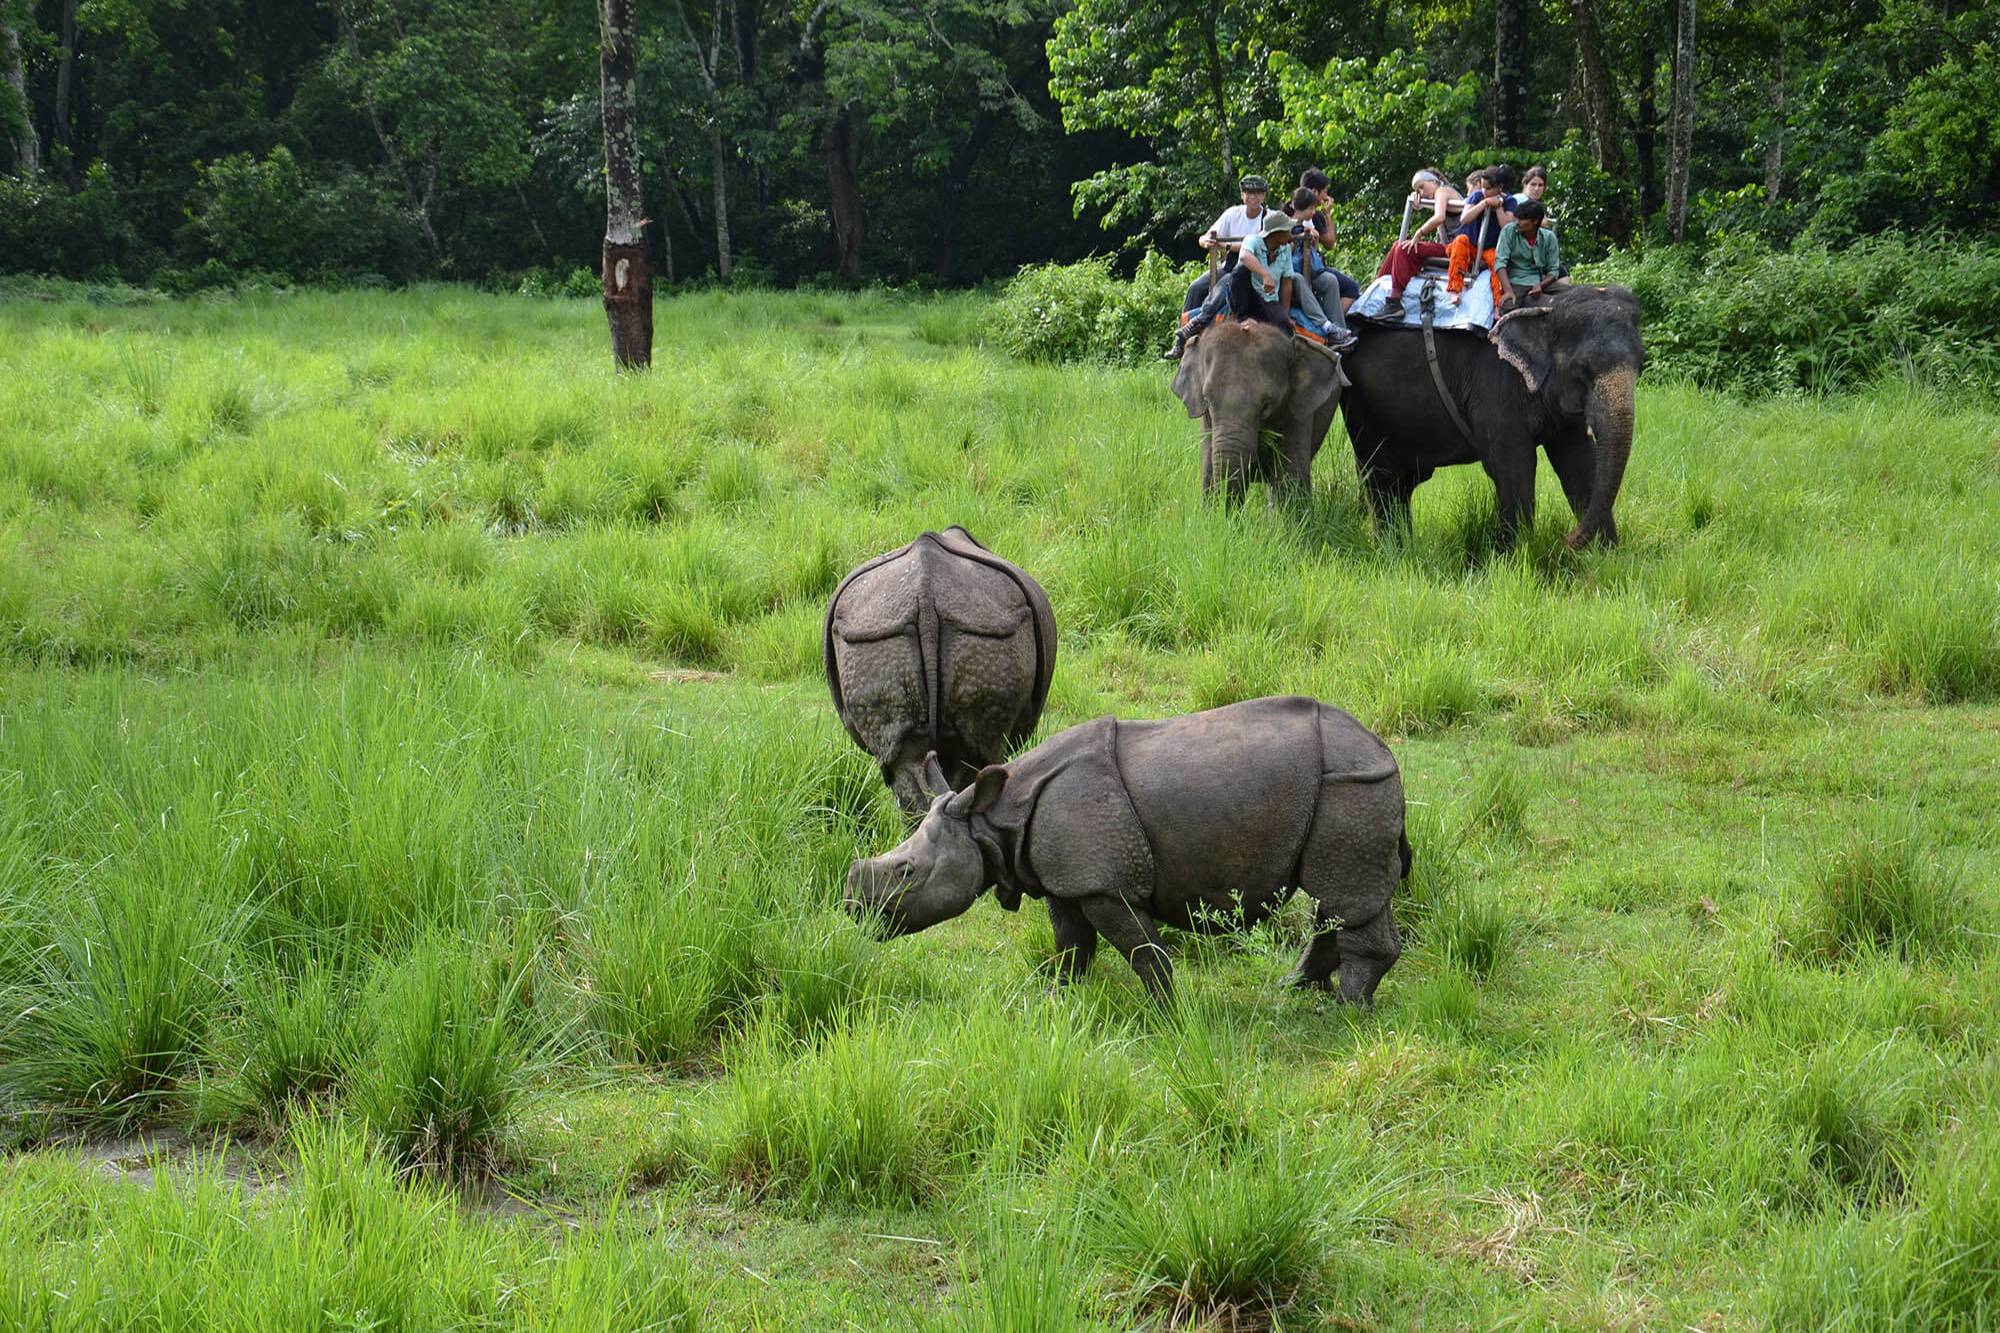 chitwan safari experience